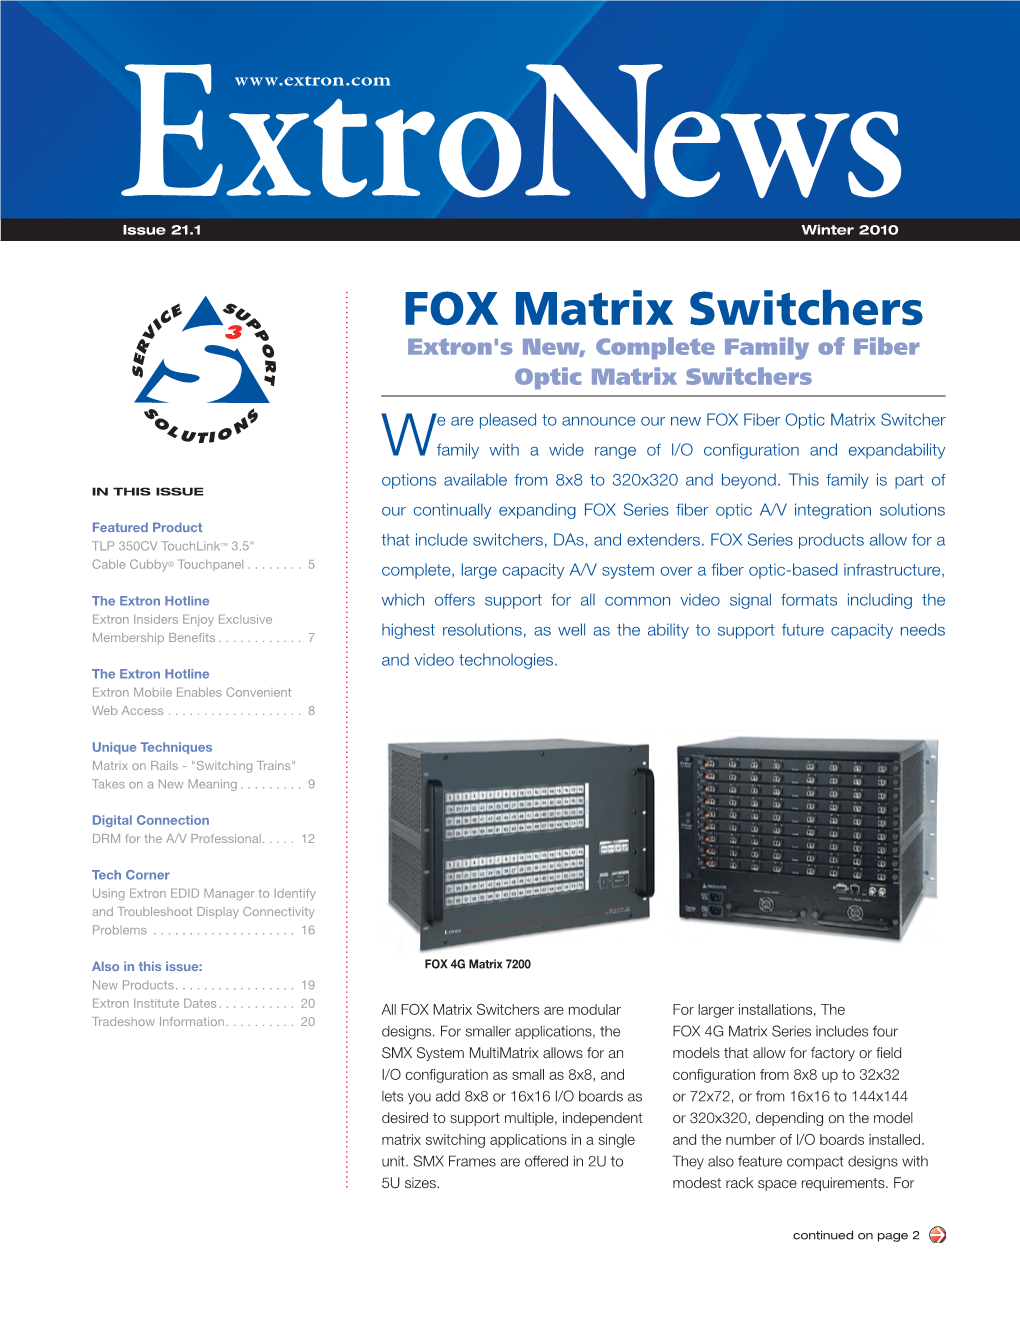 FOX Matrix Switchers Extron's New, Complete Family of Fiber Optic Matrix Switchers